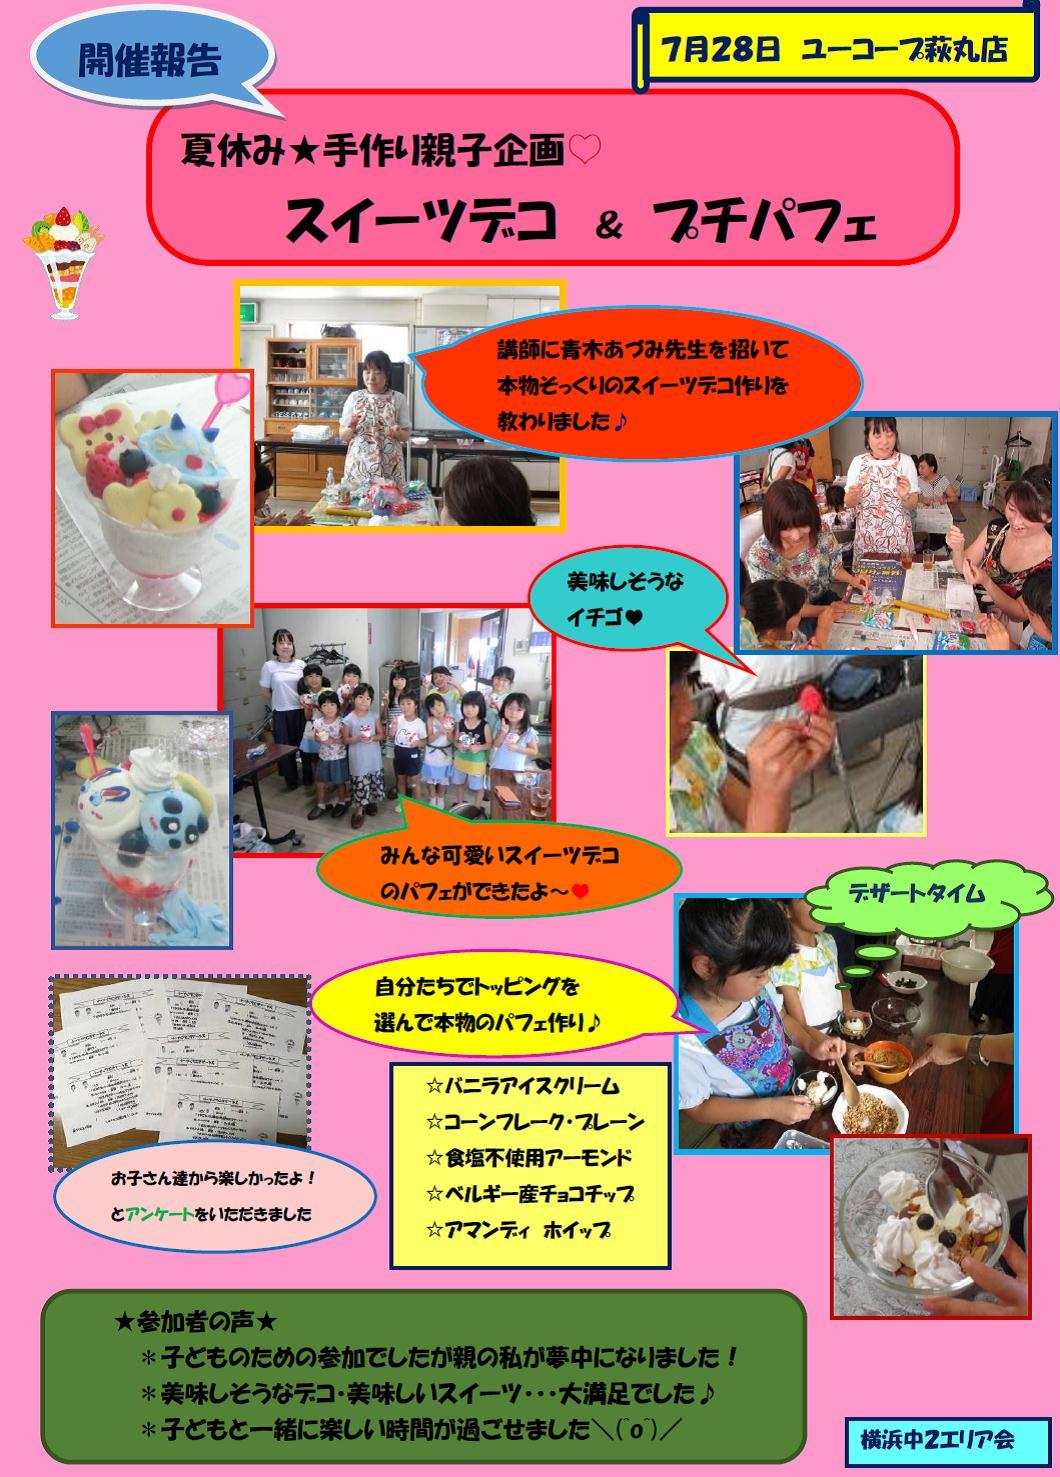 http://kanagawa.ucoop.or.jp/hiroba/areanews/files/naka2%202017072801.jpg